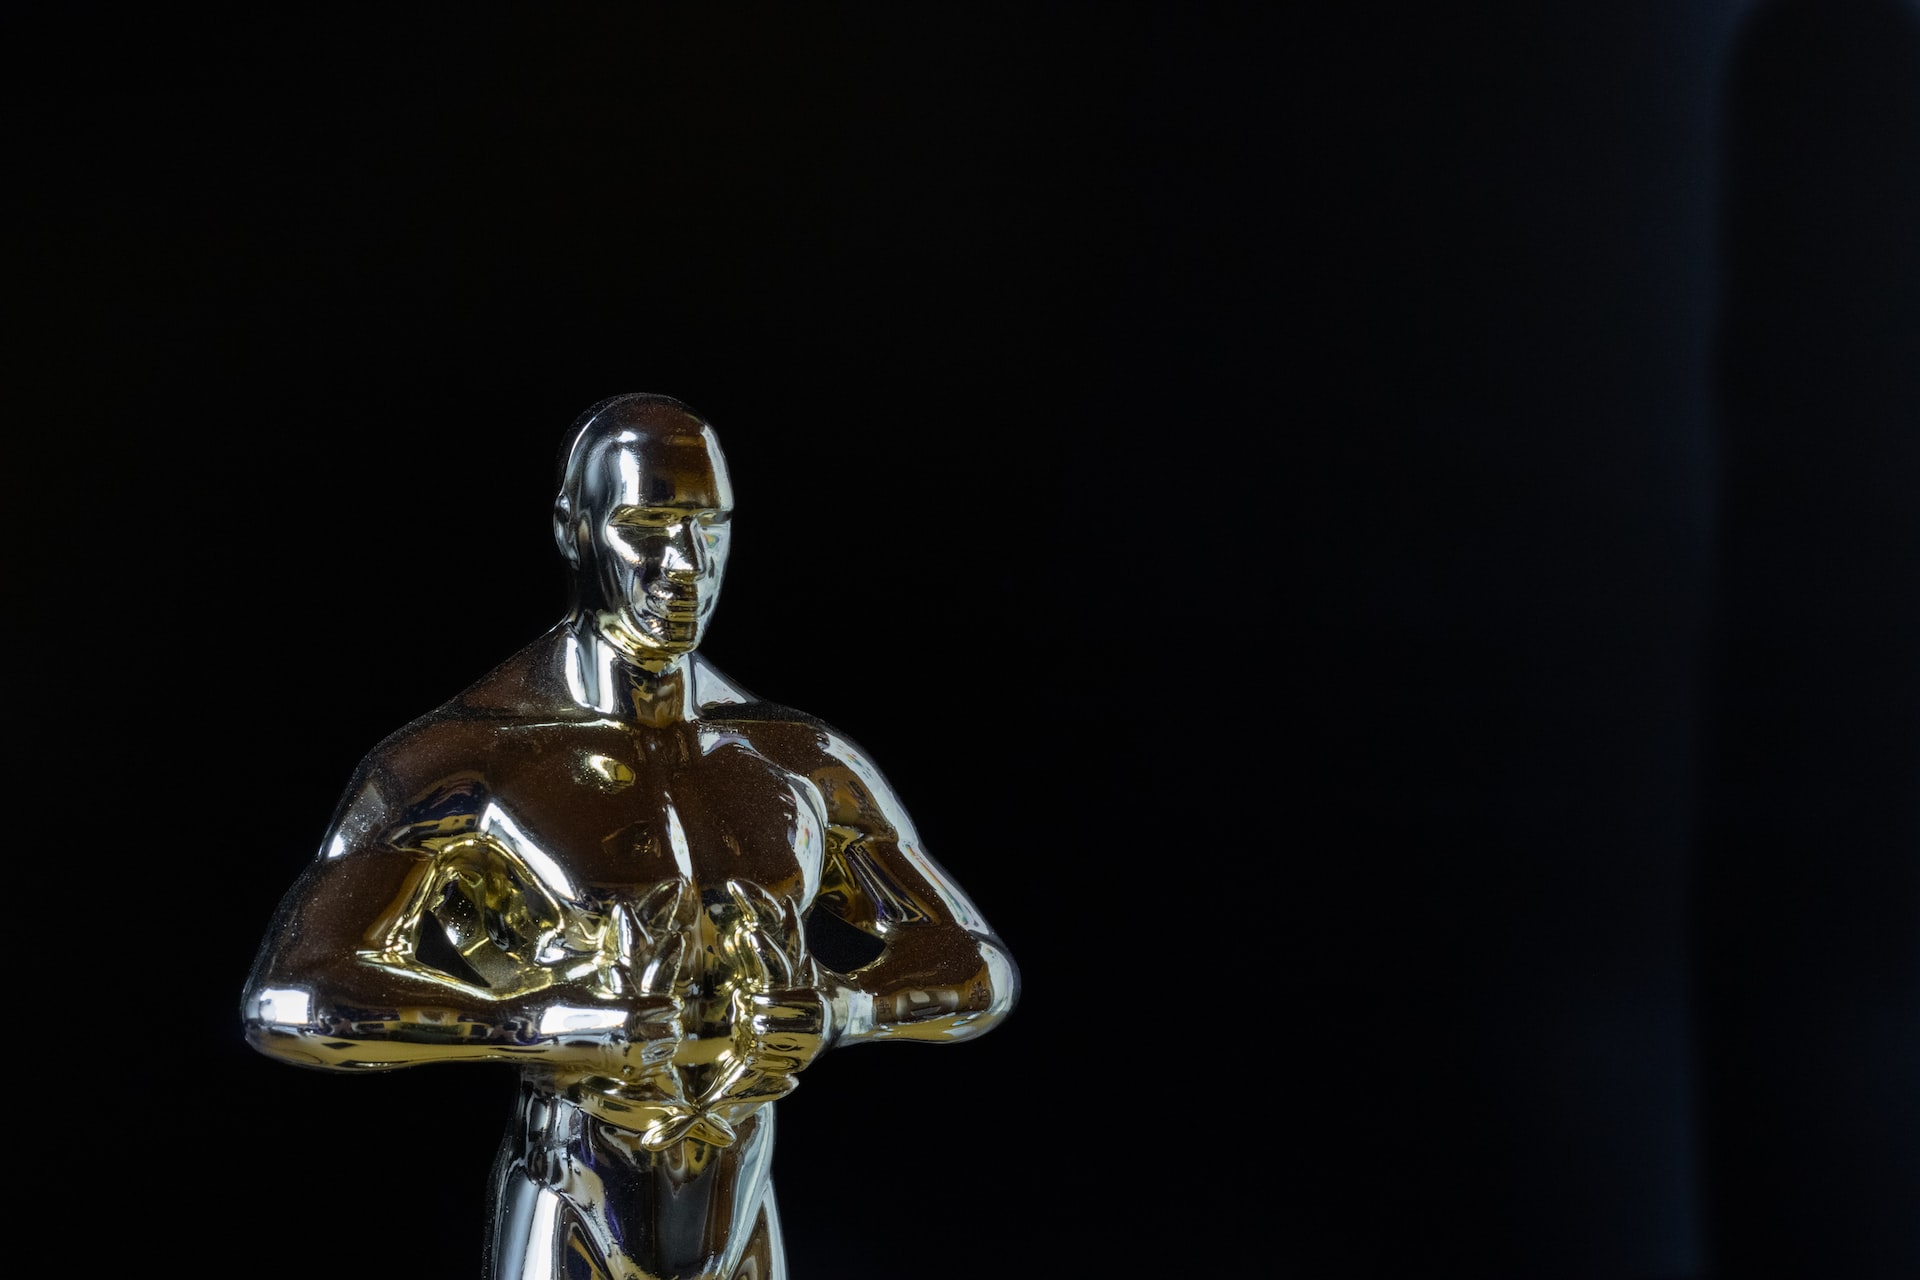 An Oscar 2023 statuette against a black background